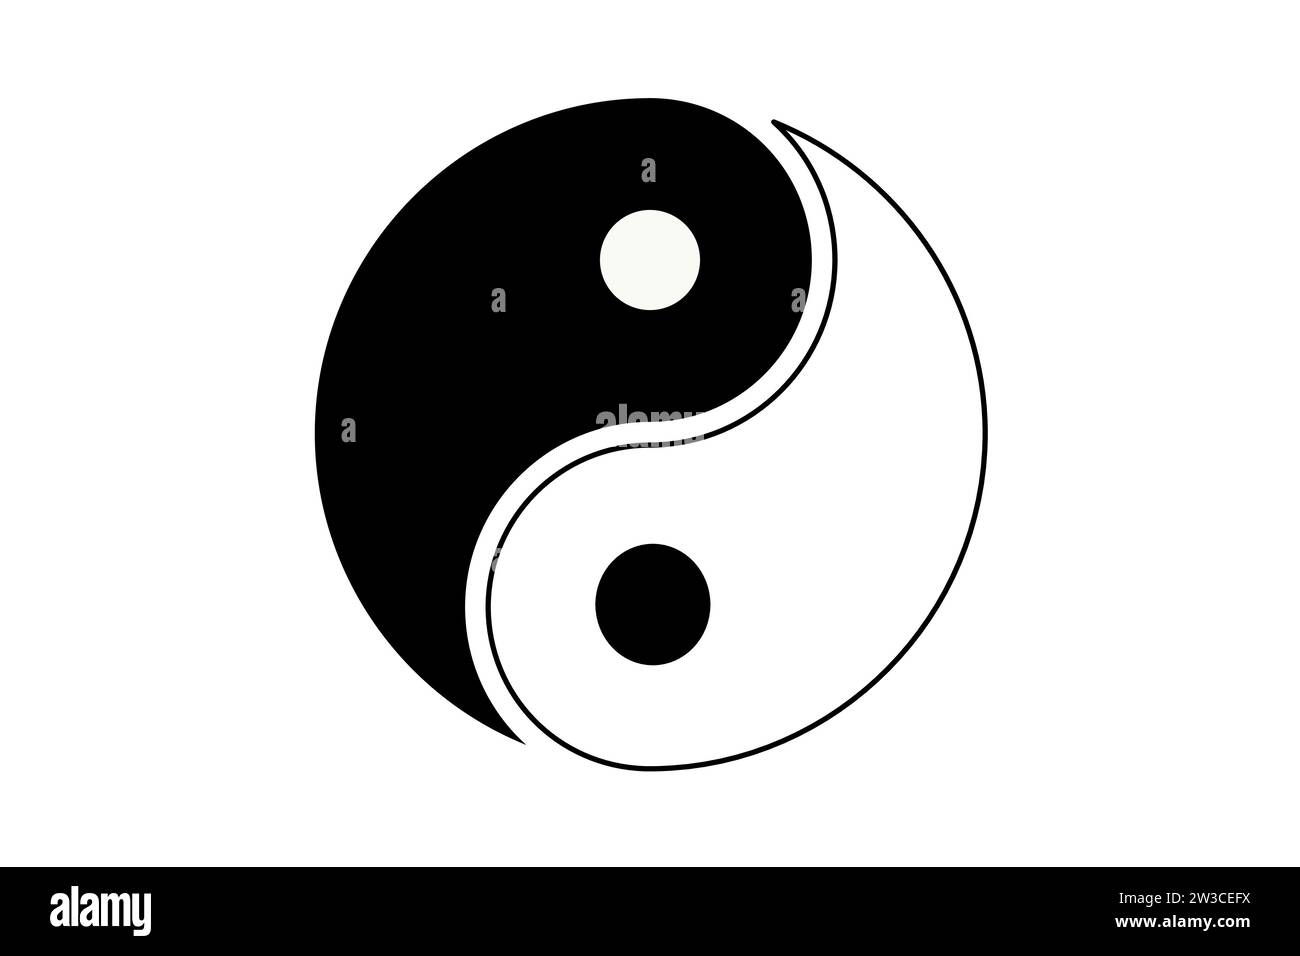 Illustrazione Yin yang. Armonia, equilibrio, Taoismo, filosofia cinese, opposti, Unity Dualism chi natura energia icone vettoriali Illustrazione Vettoriale